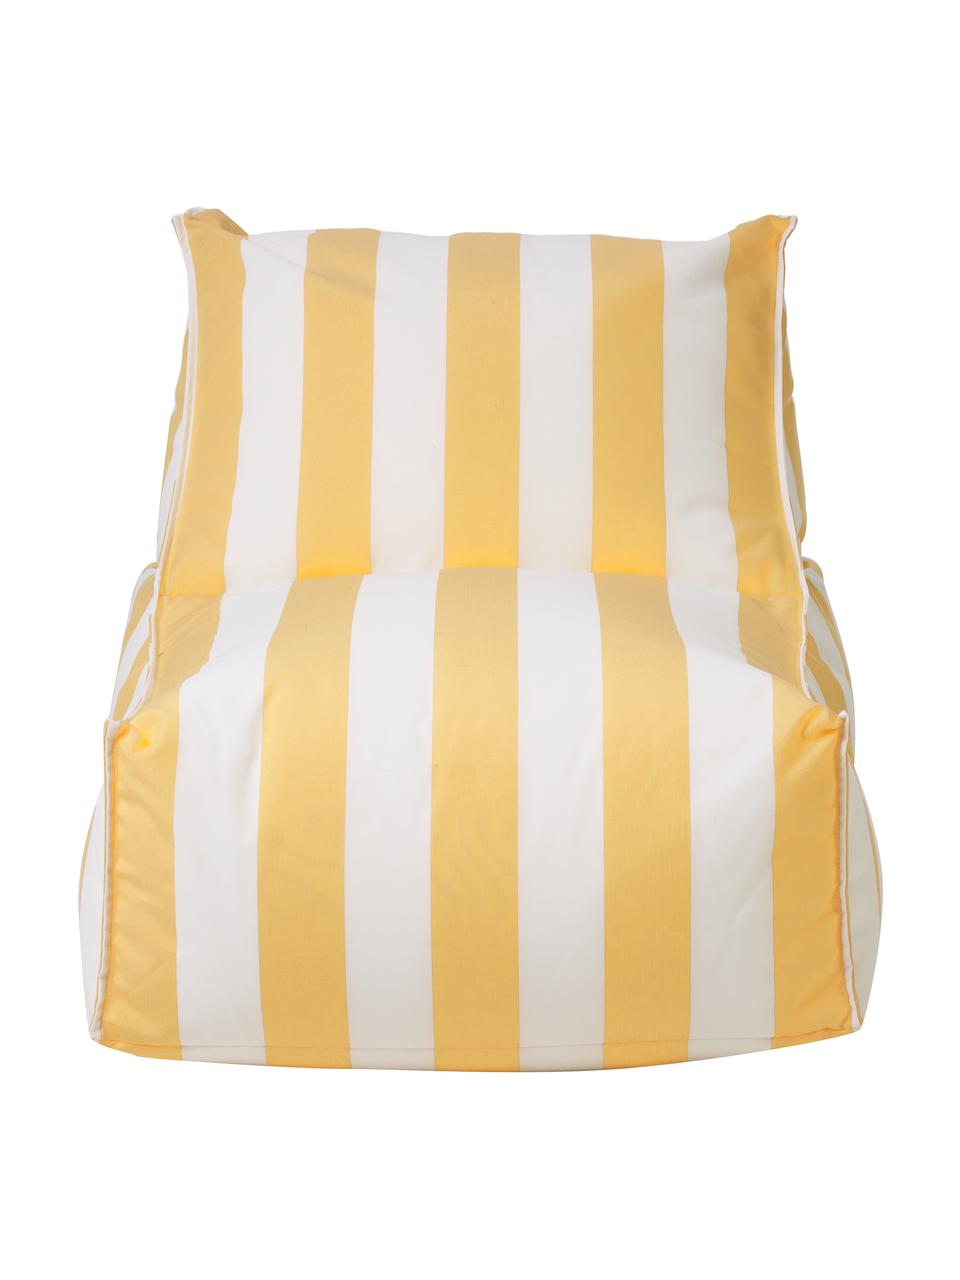 Outdoor zitzak Korfu in geel/wit, Bekleding: 100% polypropyleen, teflo, Geel, wit, B 65 x L 100 cm